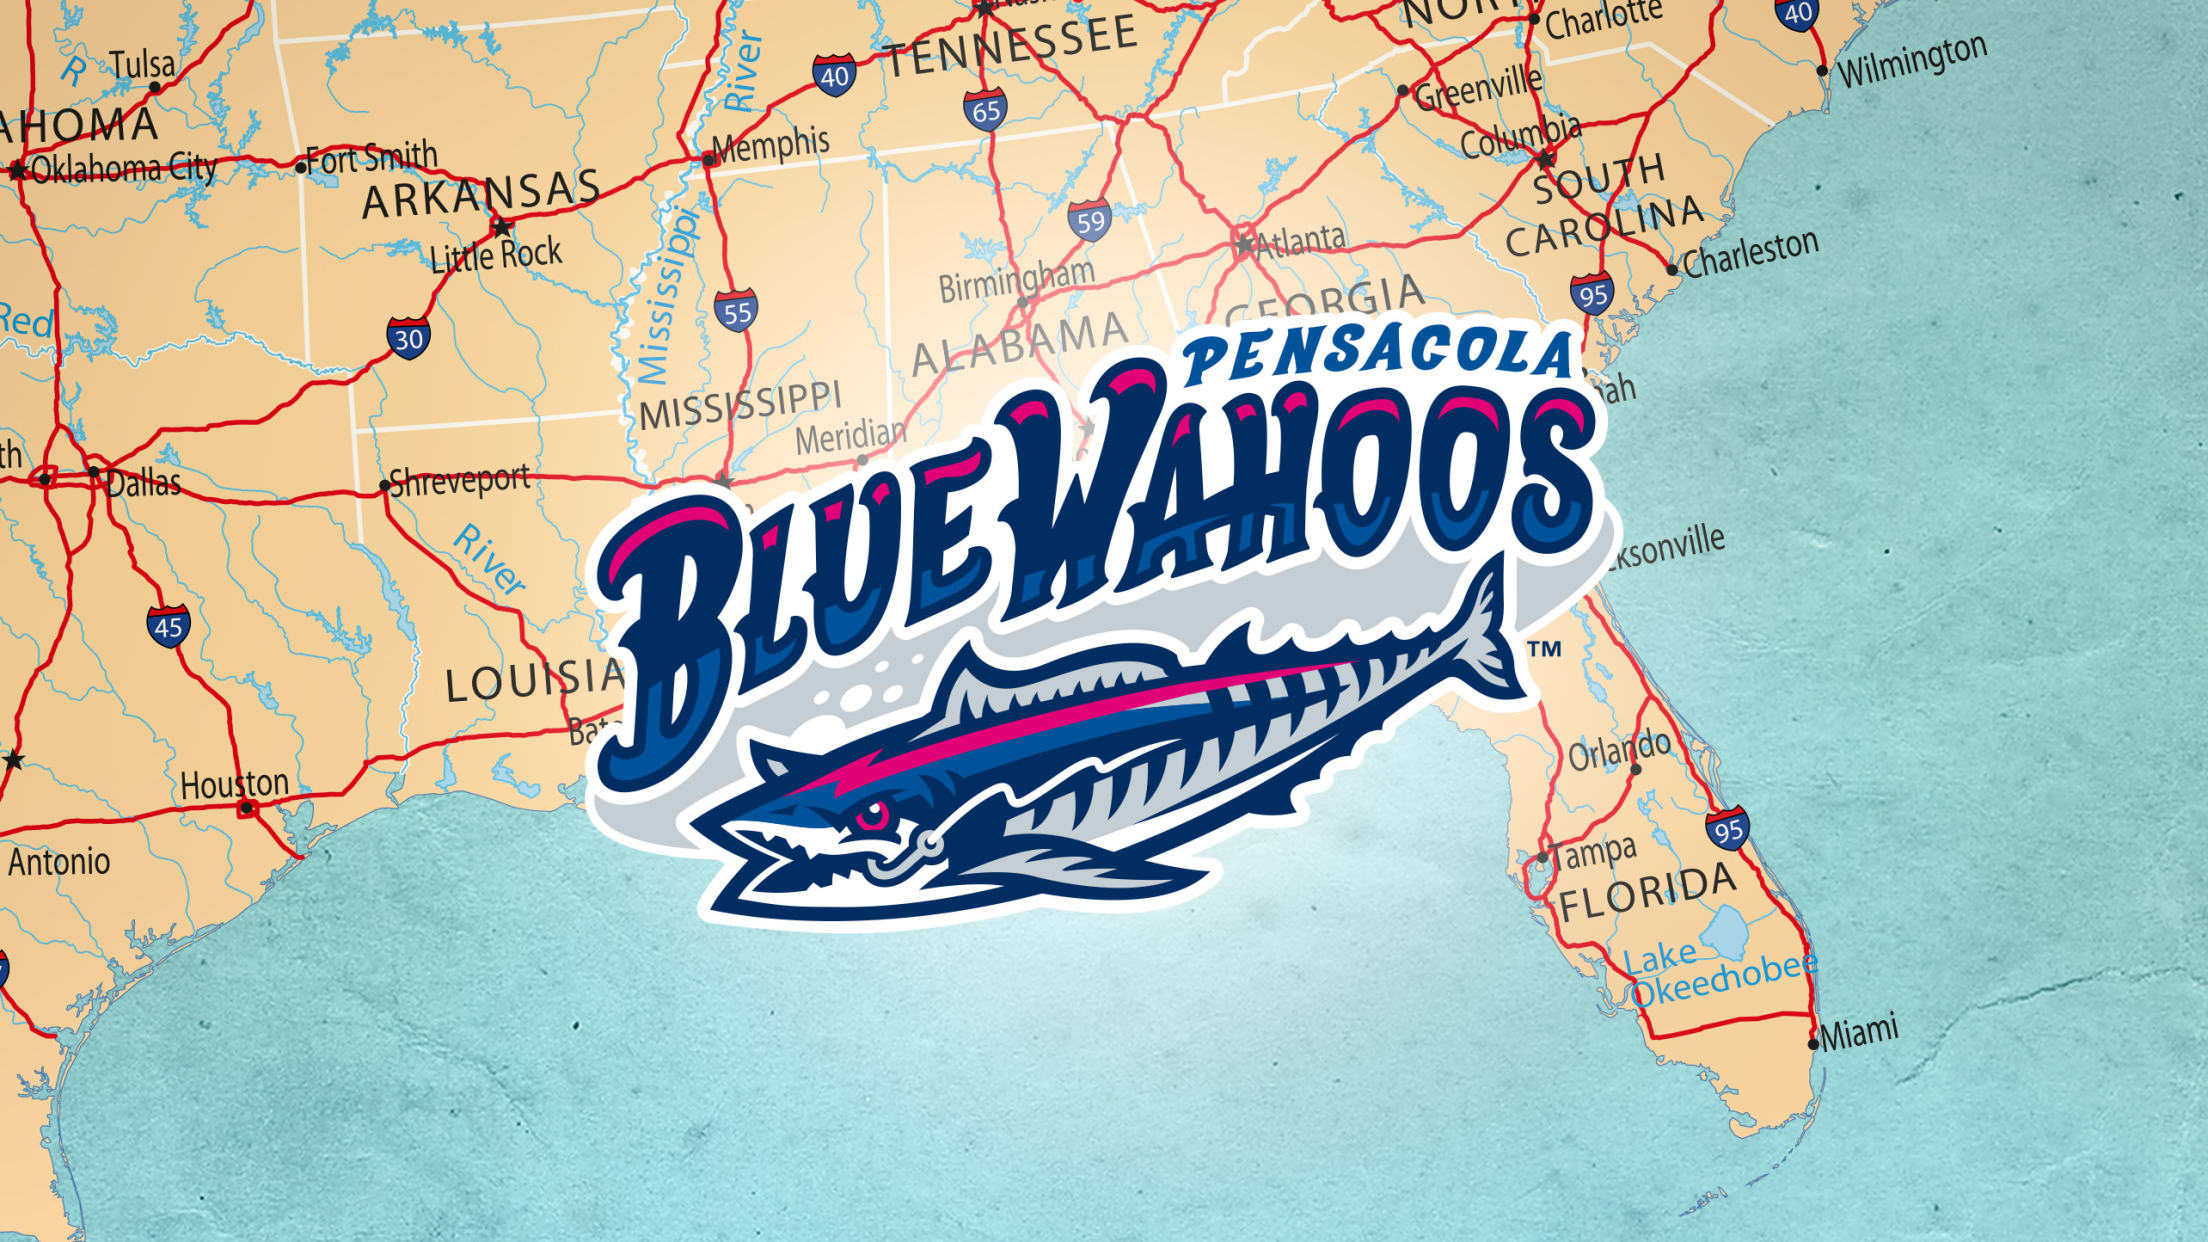 Explore Blue Wahoos Stadium Home of the Pensacola Blue Wahoos